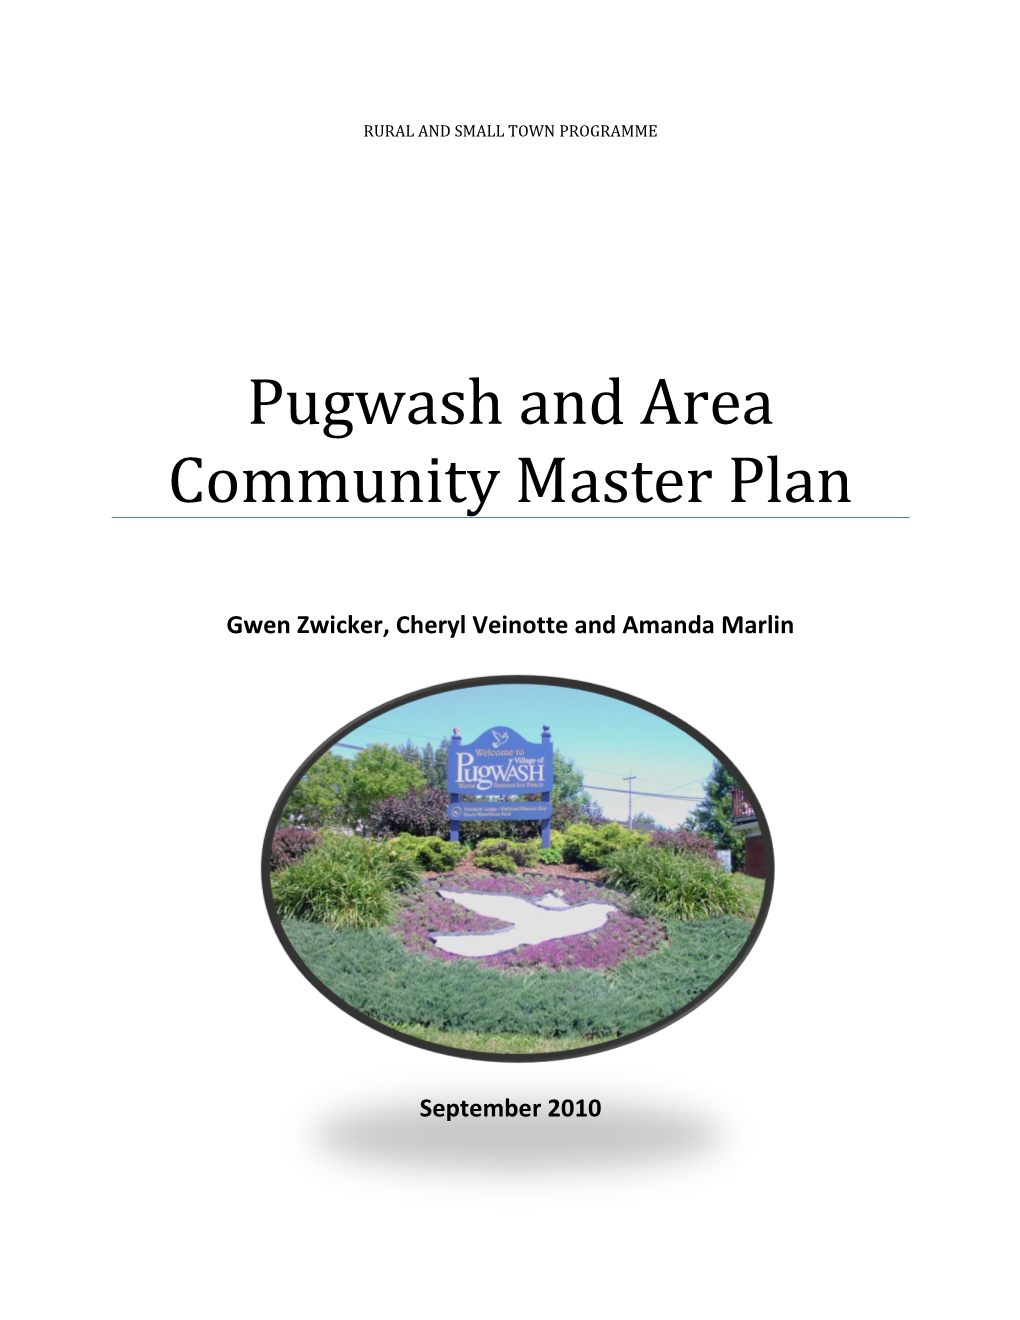 Pugwash and Area Community Master Plan